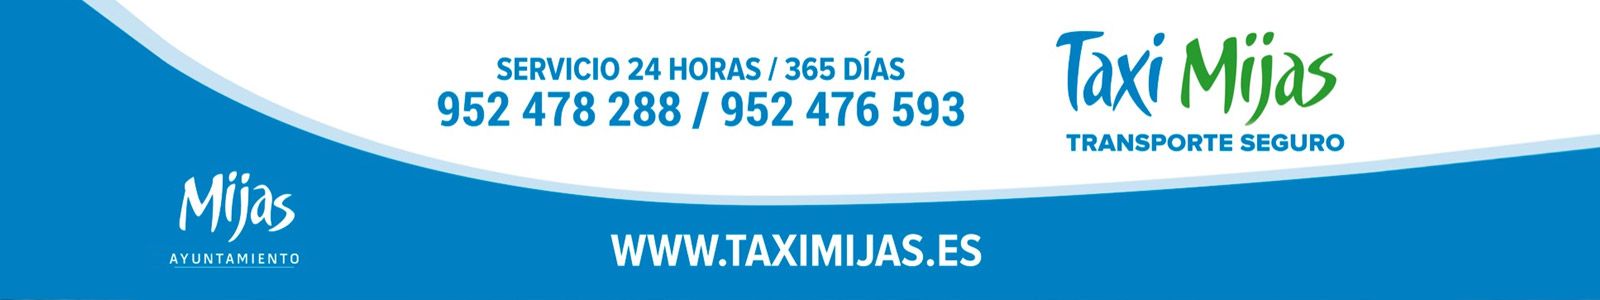 Radio Taxi Mijas banner 7